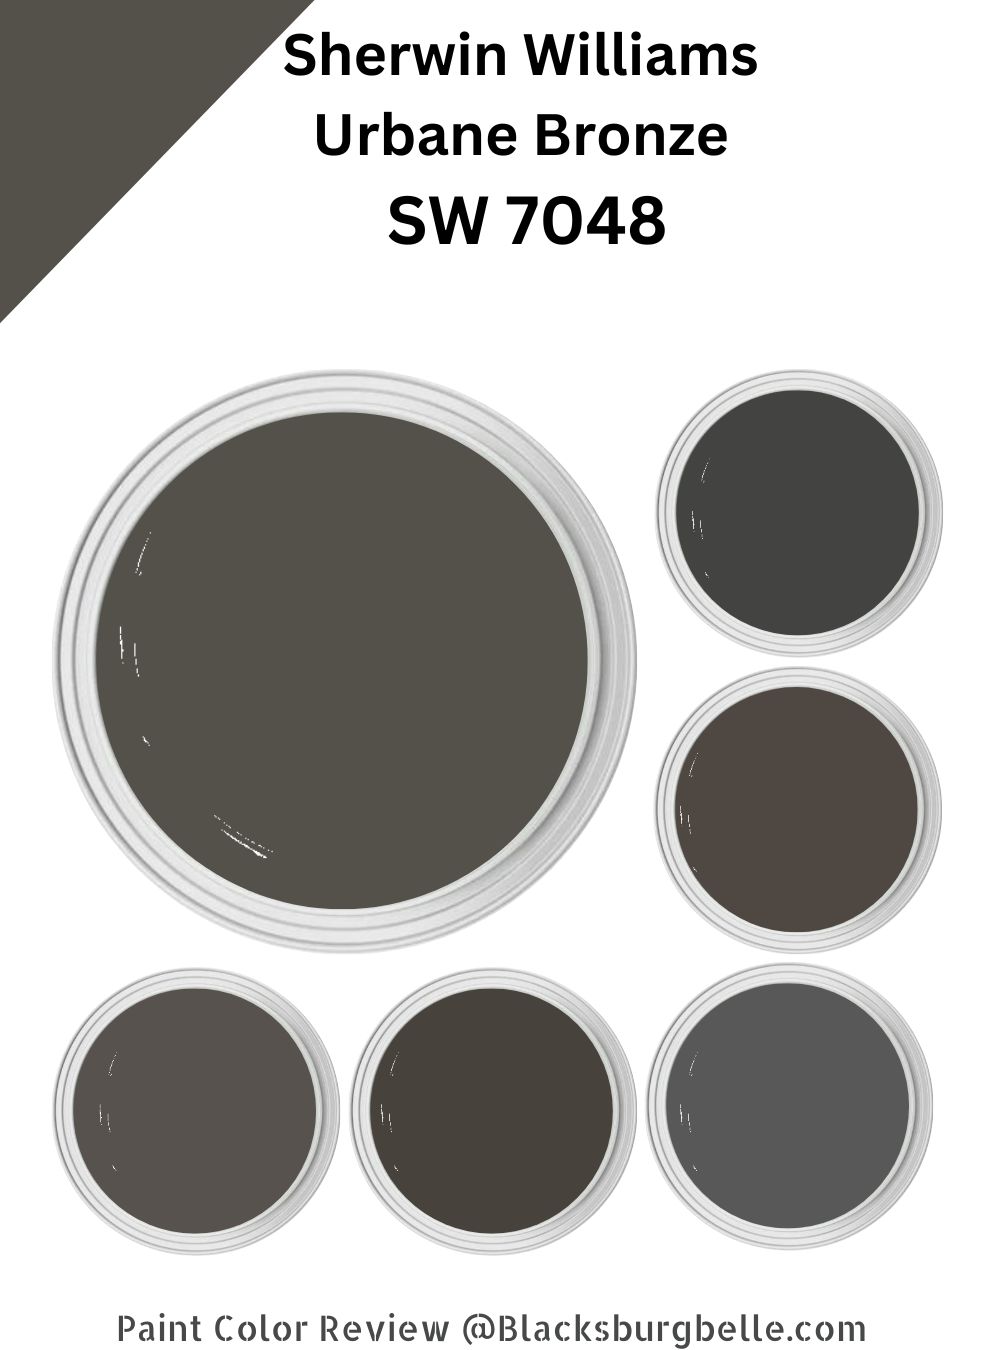 Sherwin Williams Urbane Bronze (SW 7048) Paint Color Review & Pics